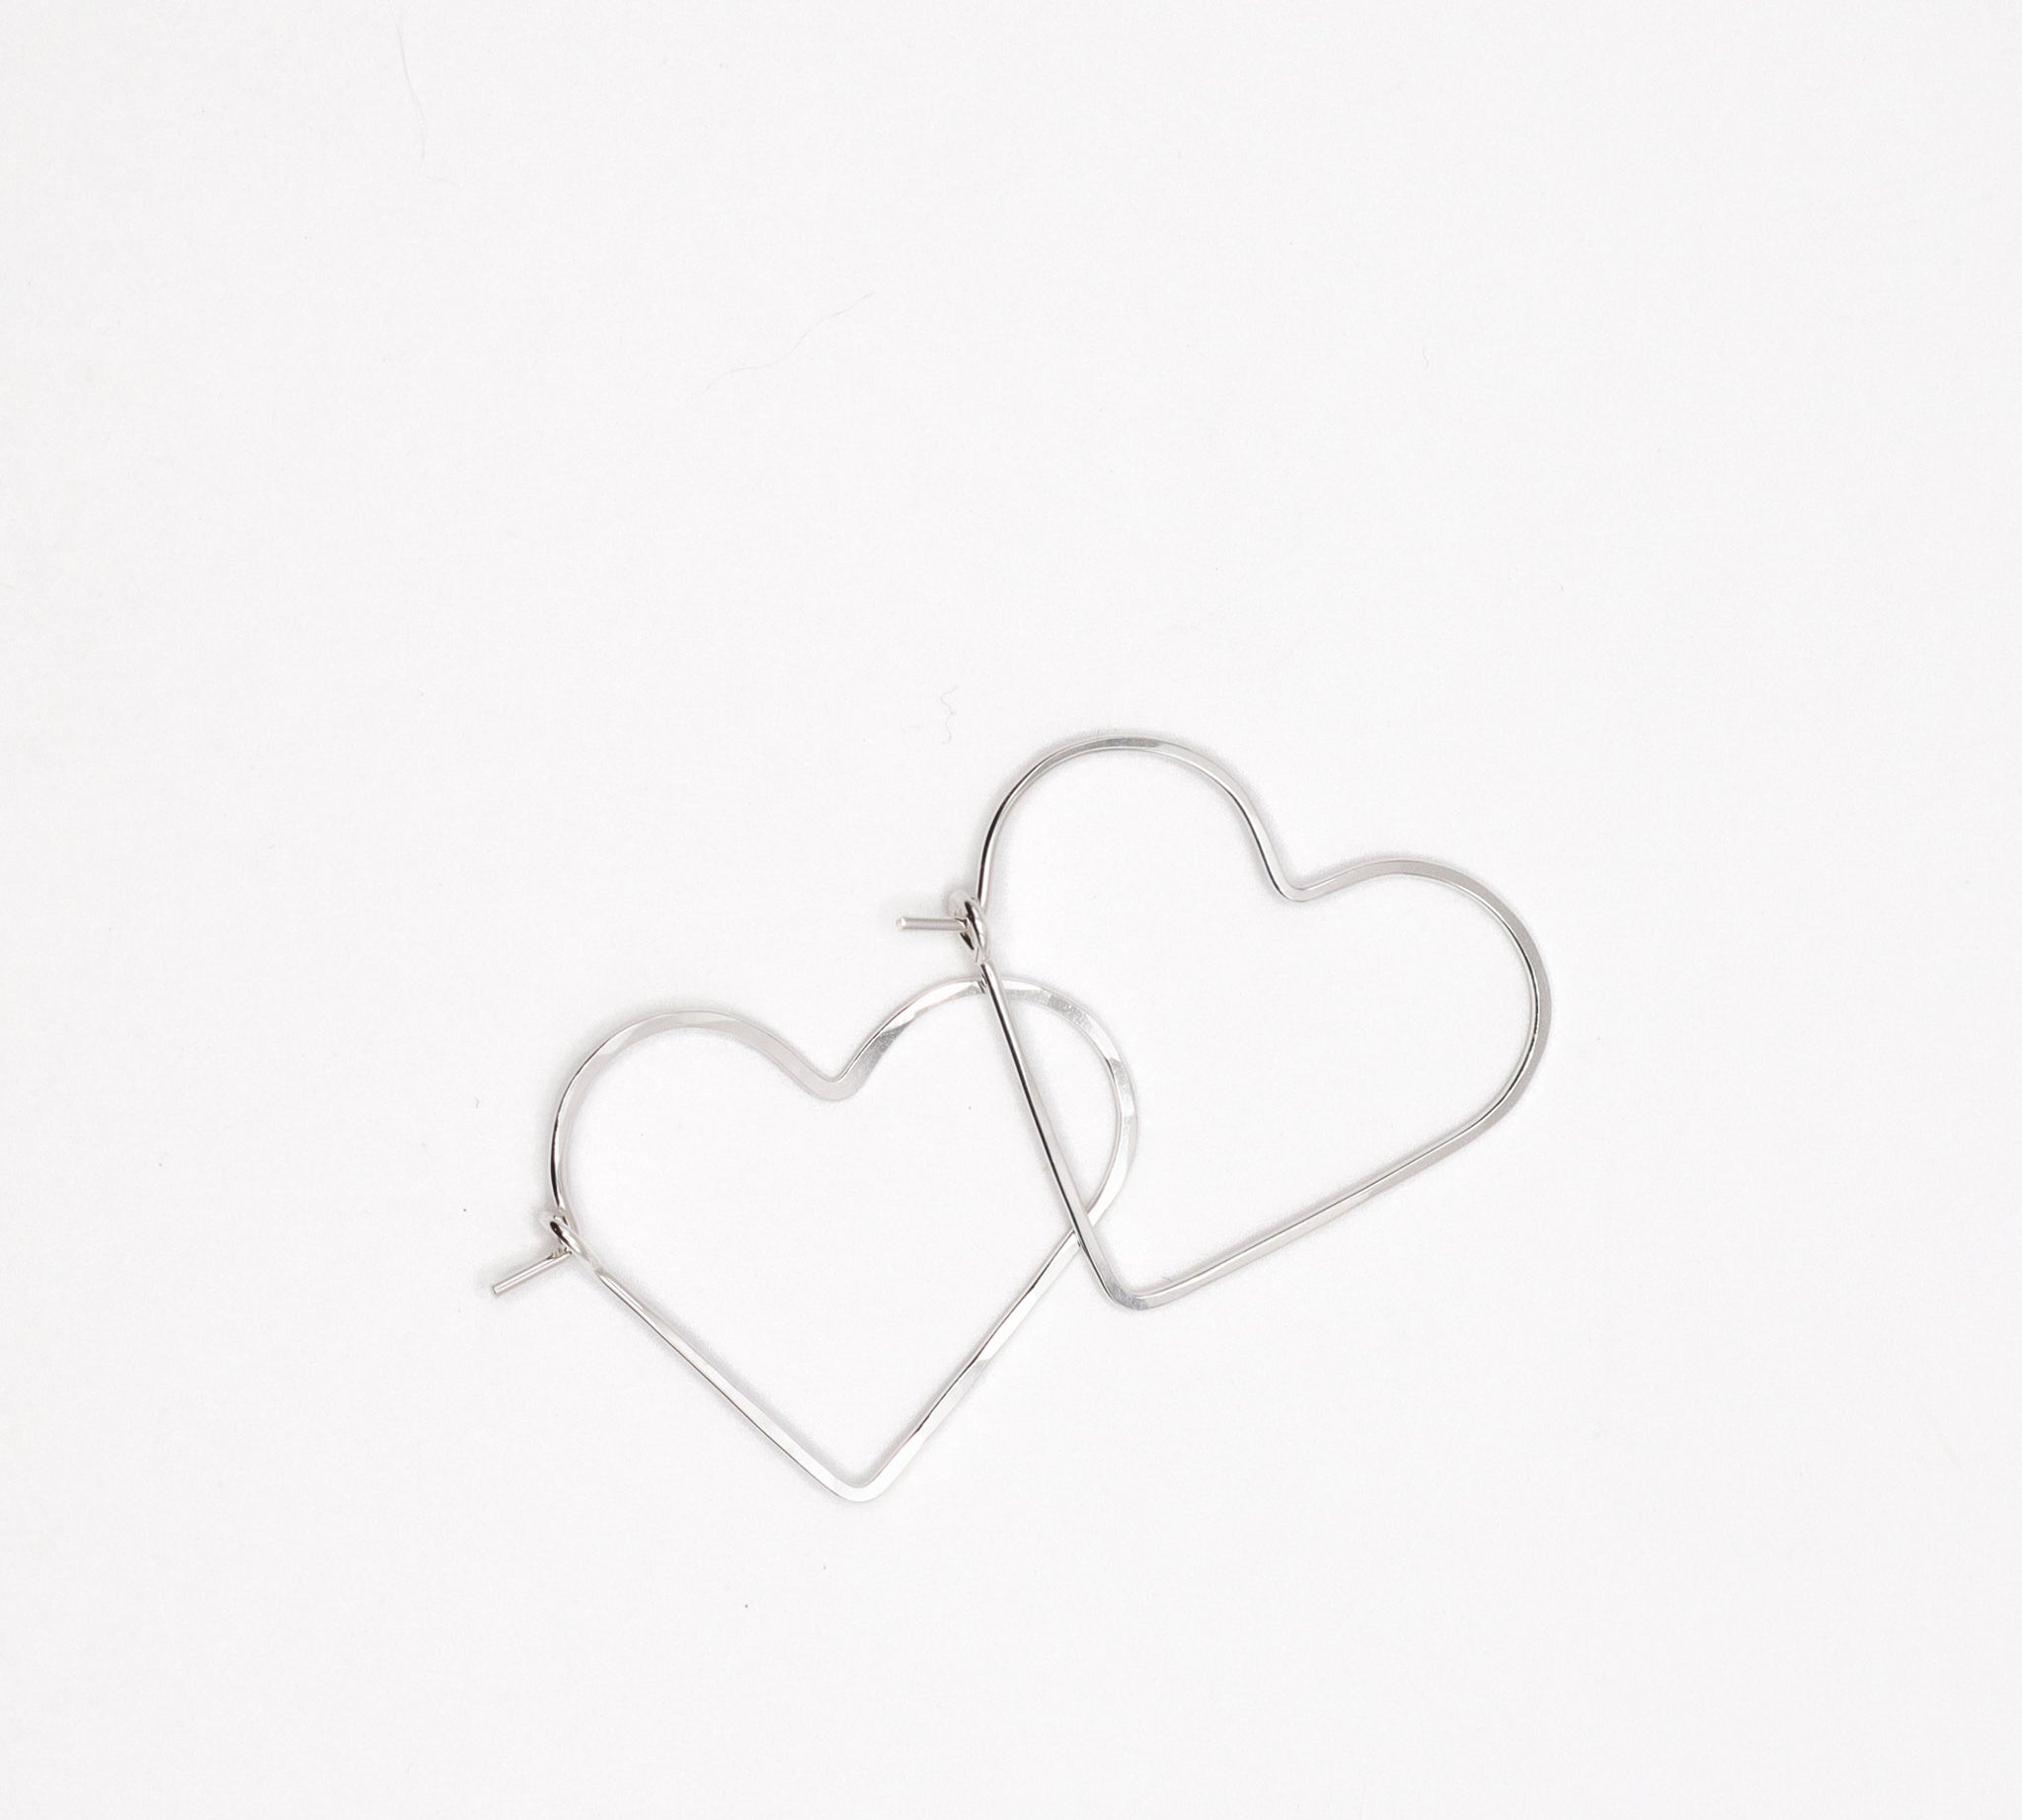 Petite Silver Heart Hoop Earrings, featured image